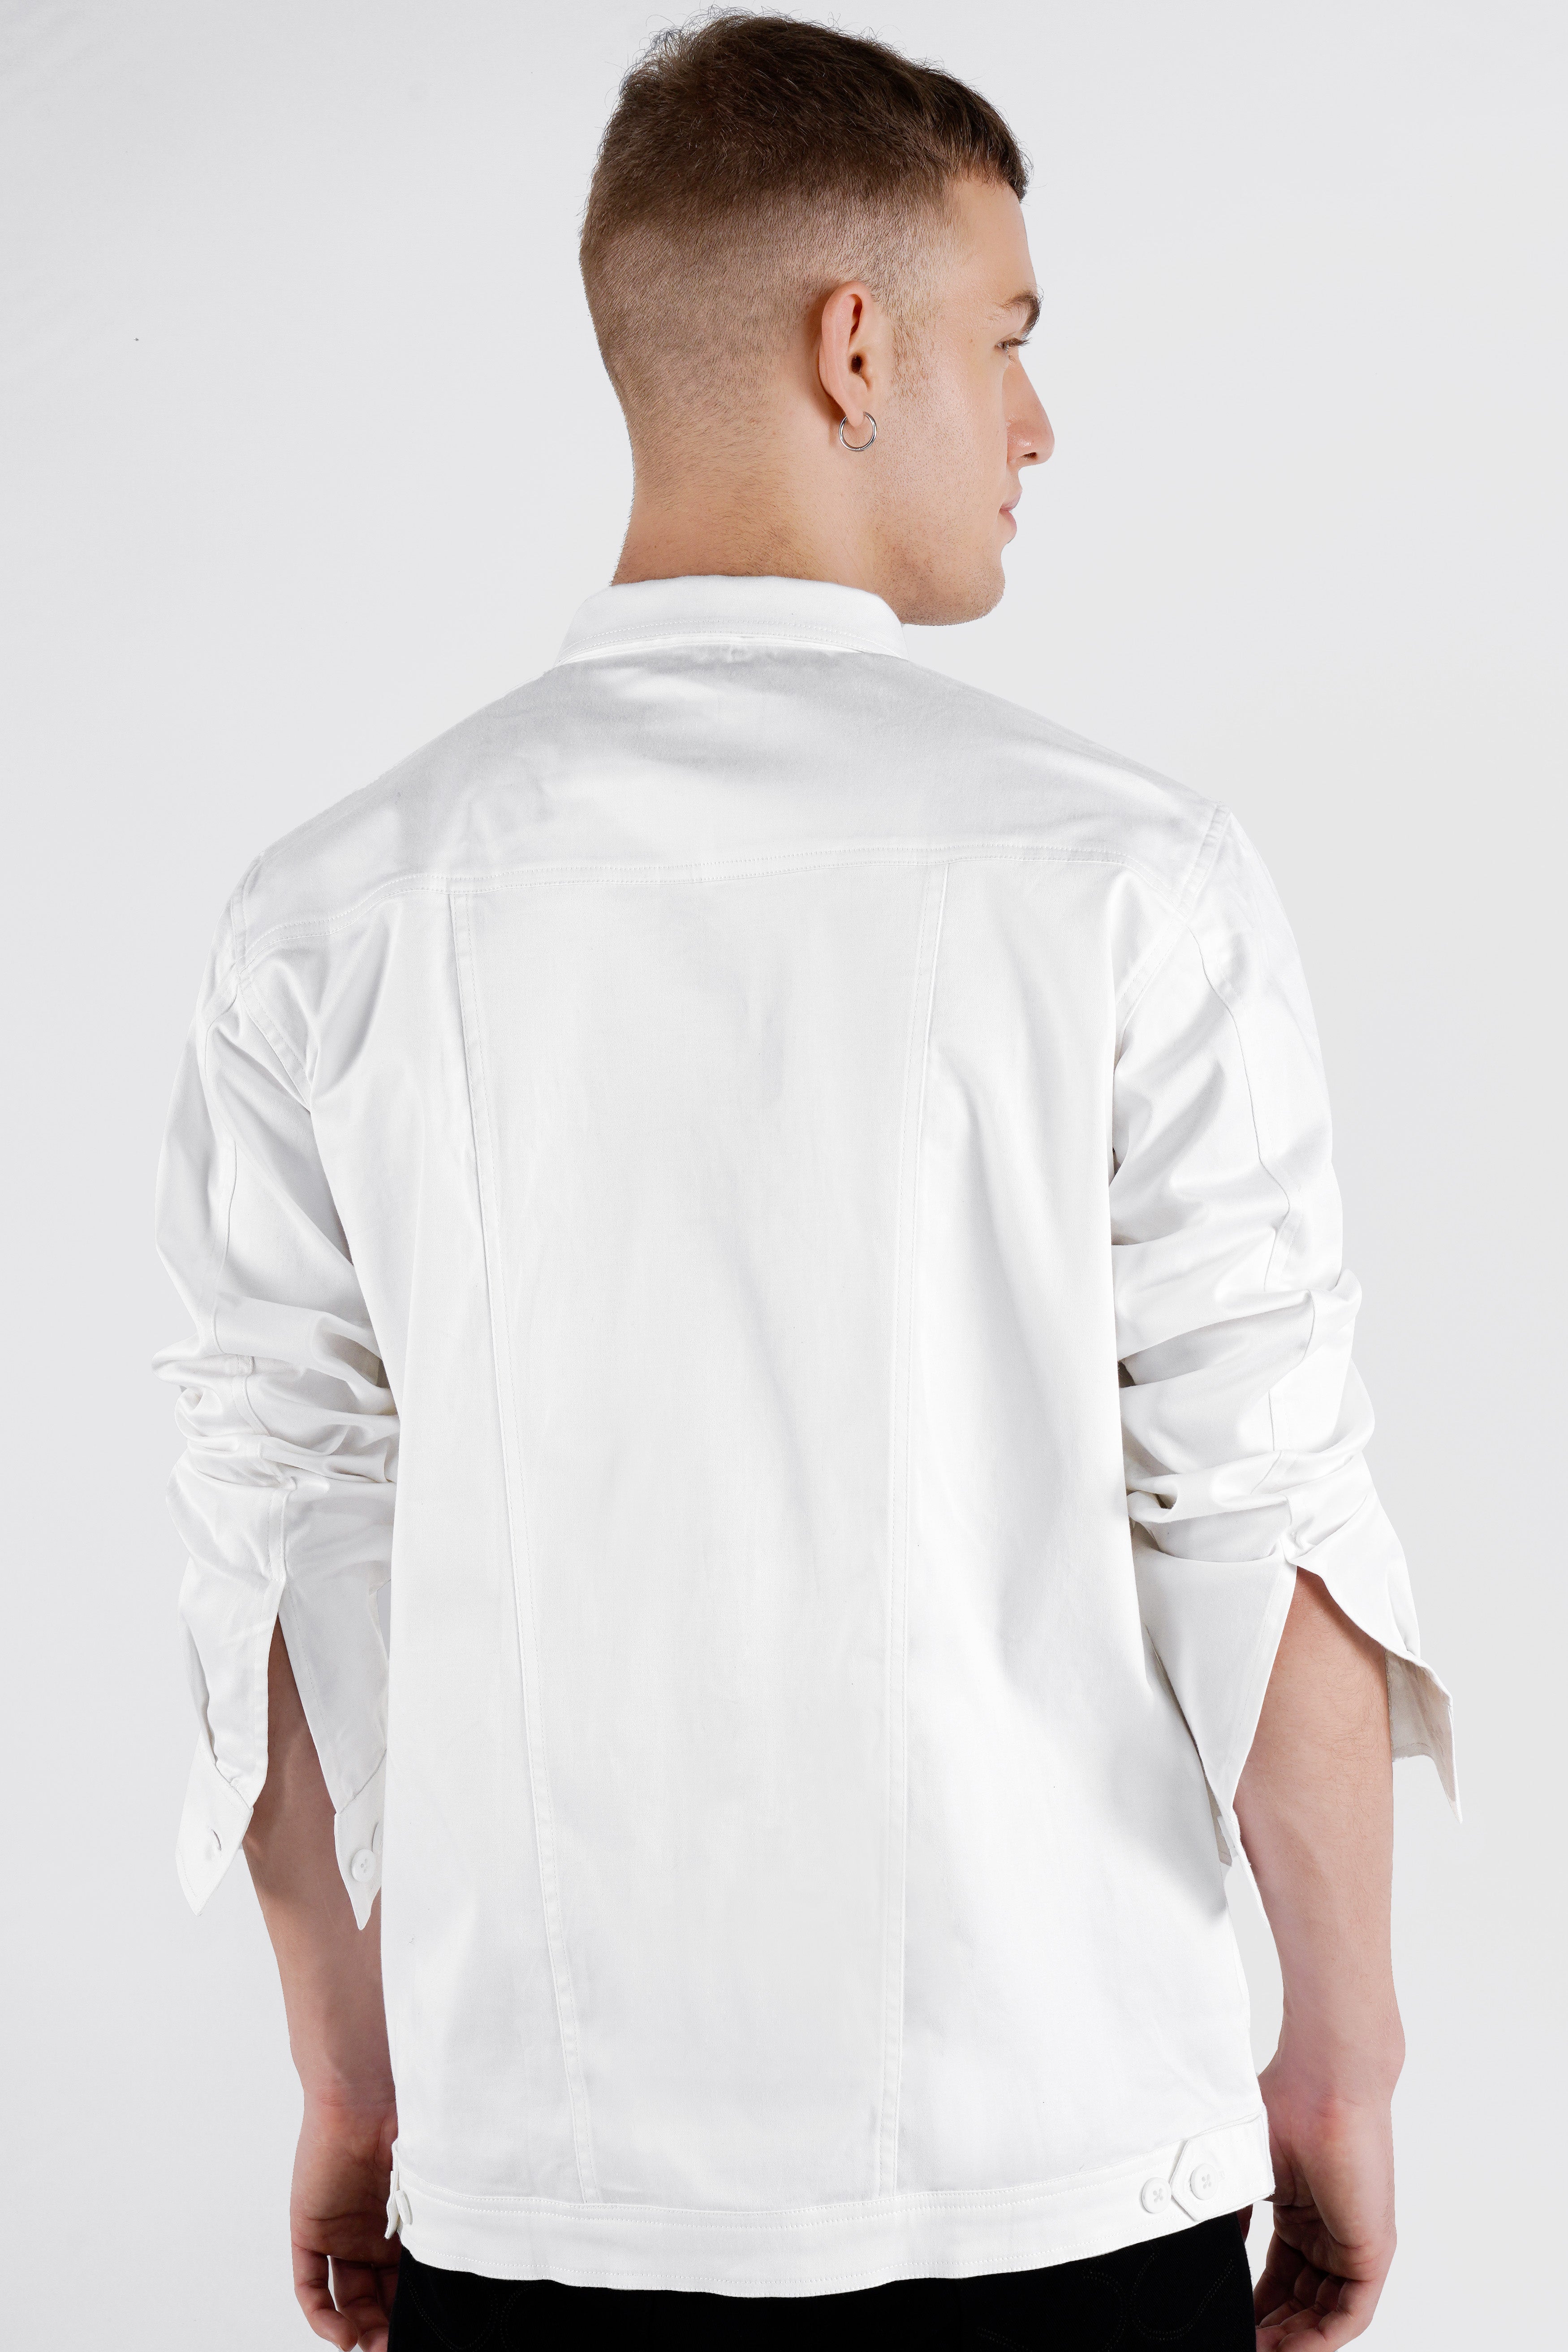 Bright White Hand Painted Super Soft Premium Cotton Designer Shirt